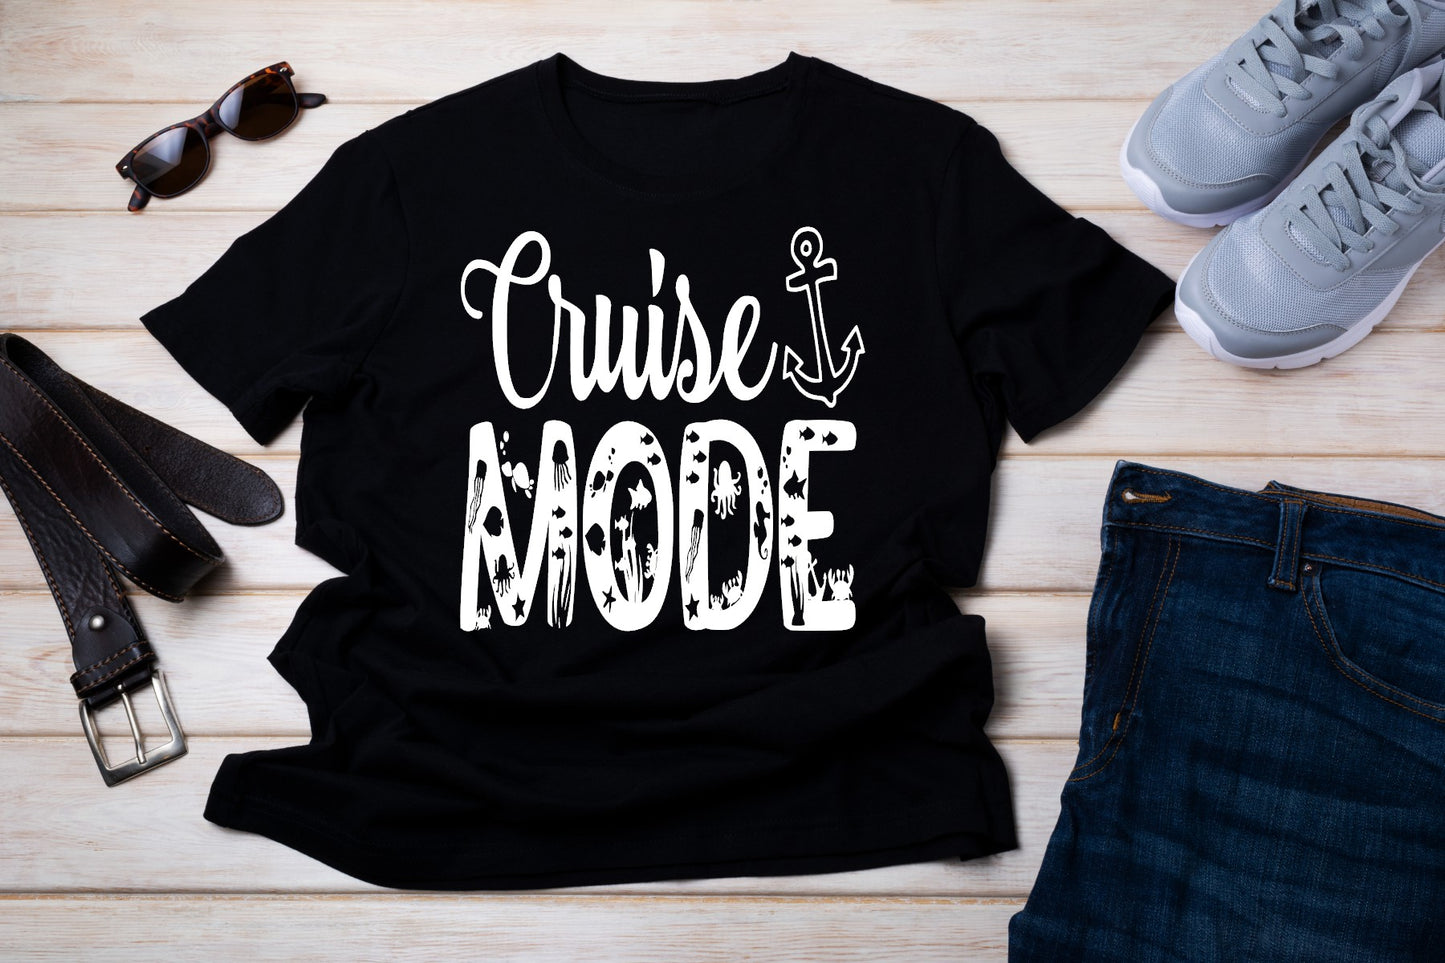 Cruise Mode